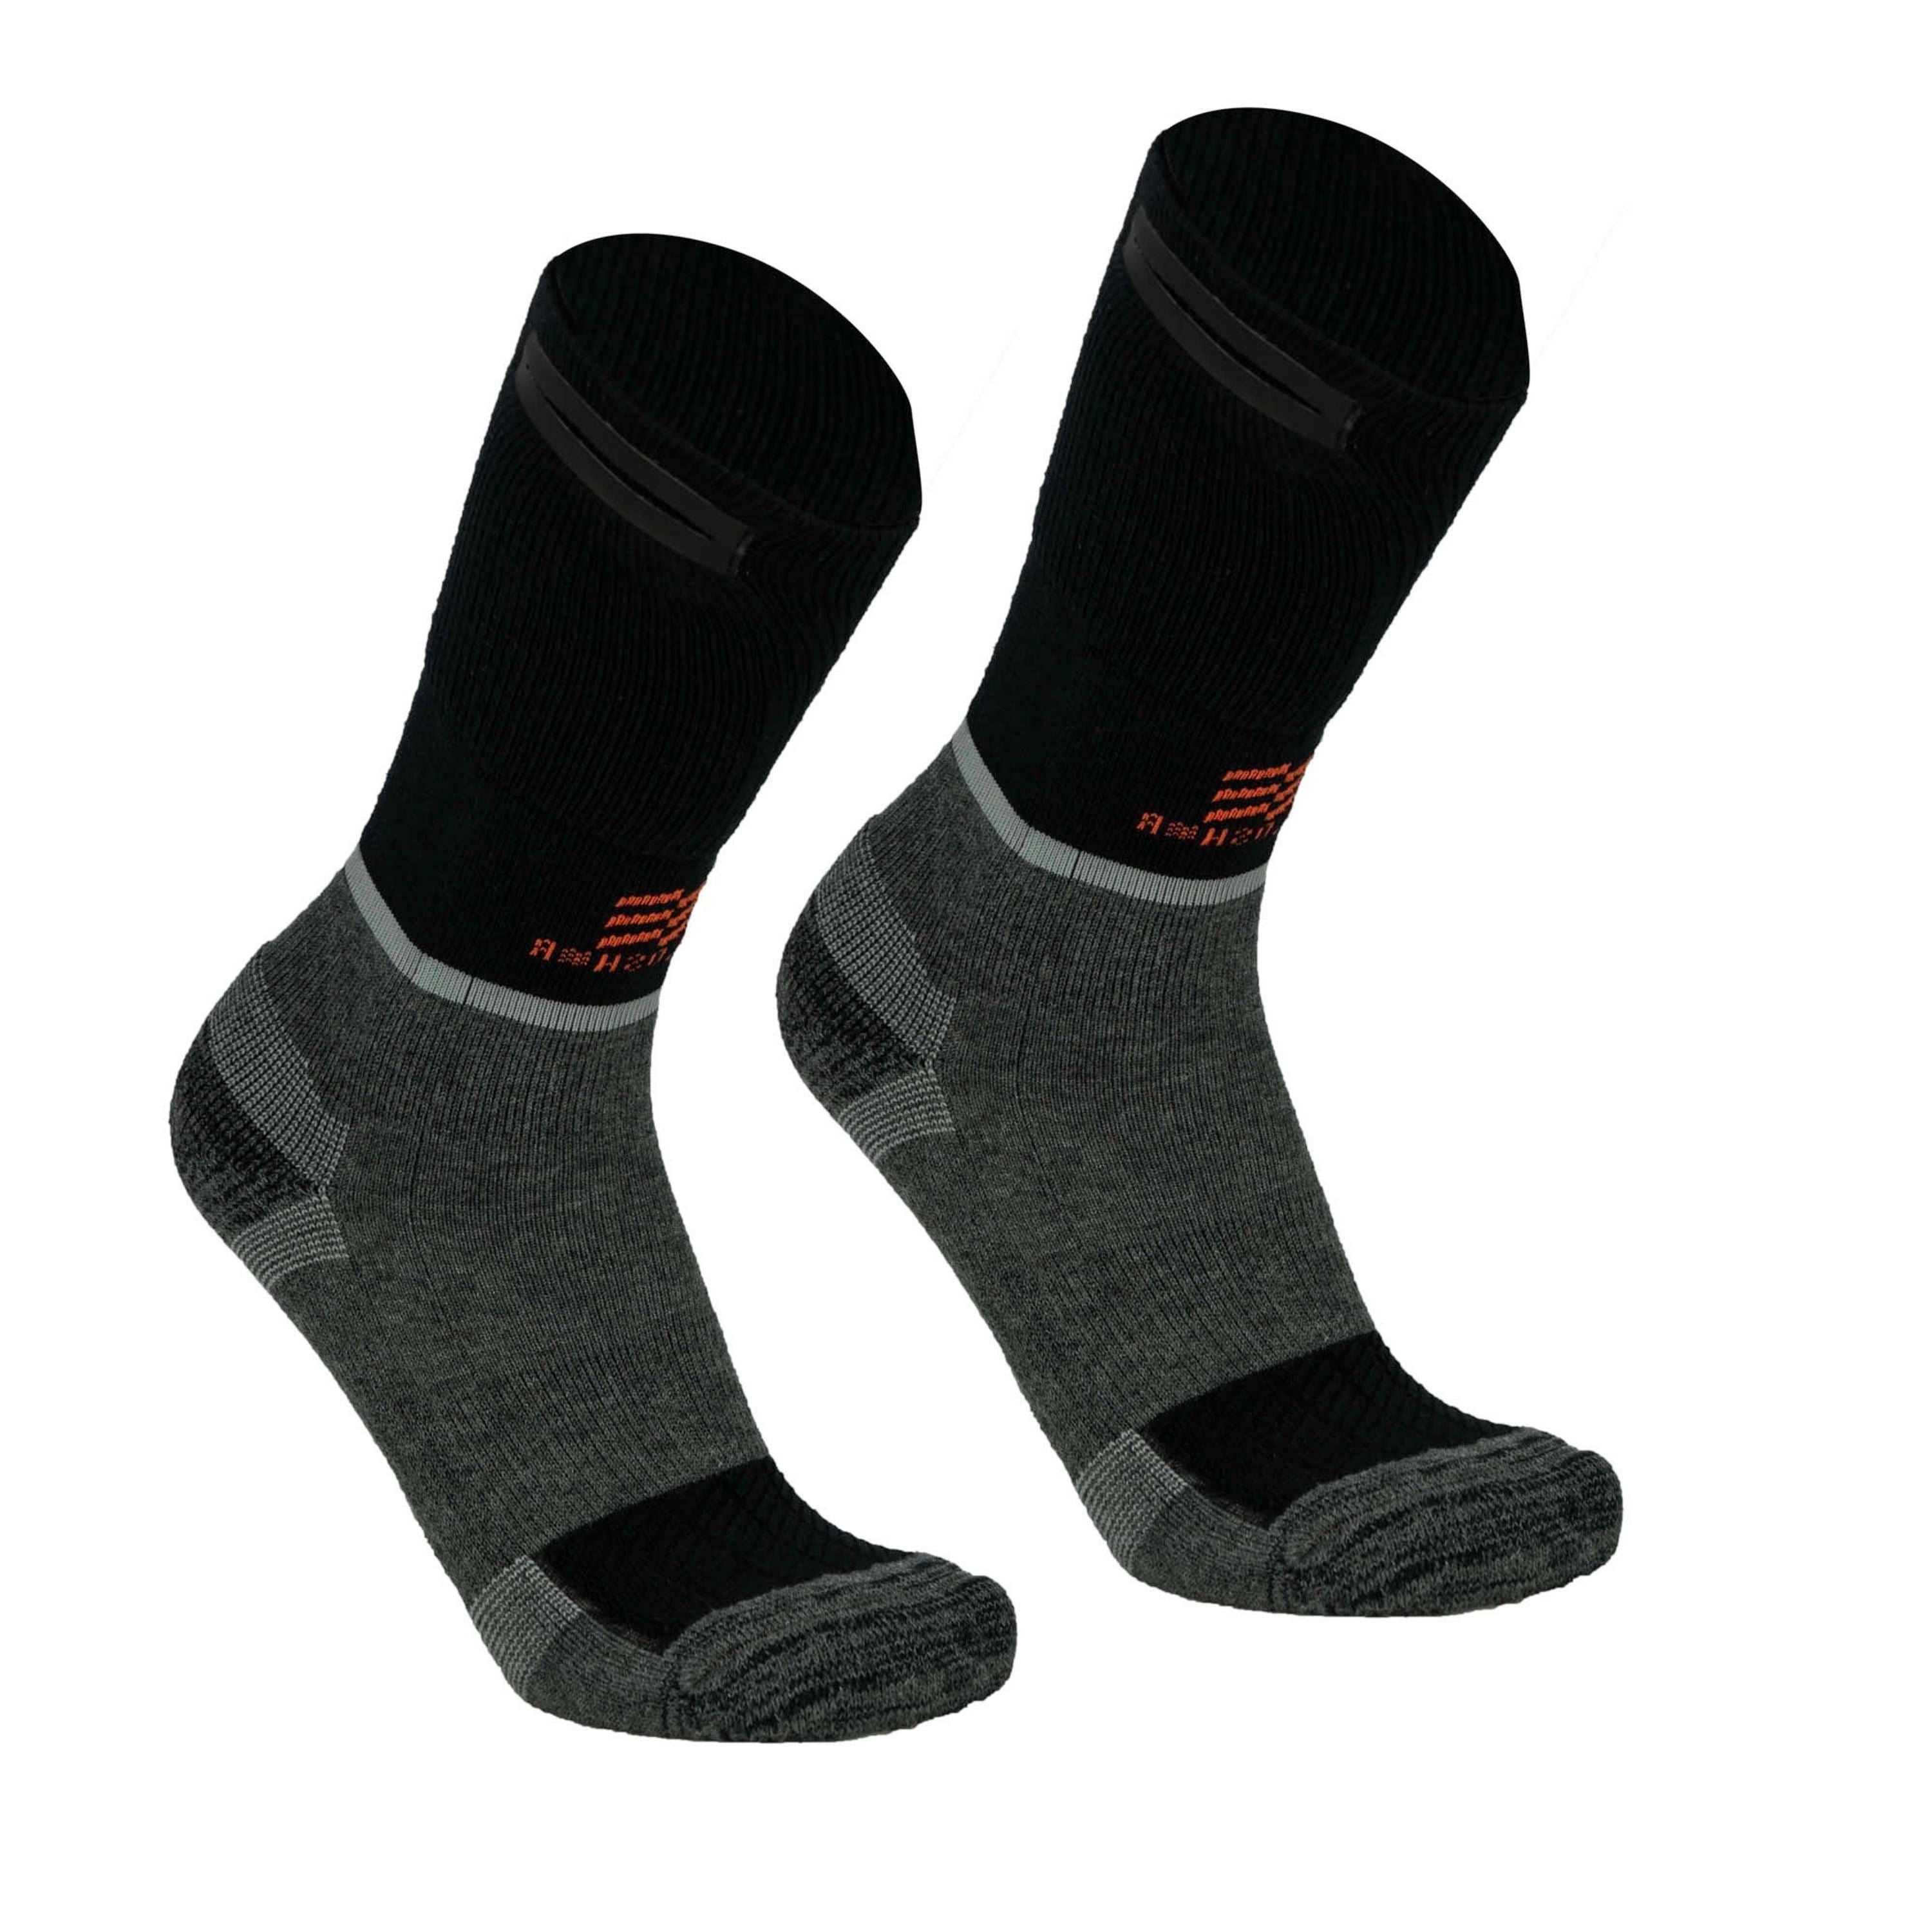 Chaussettes chauffantes mérinos - Unisexe||Merino heated socks - Unisex